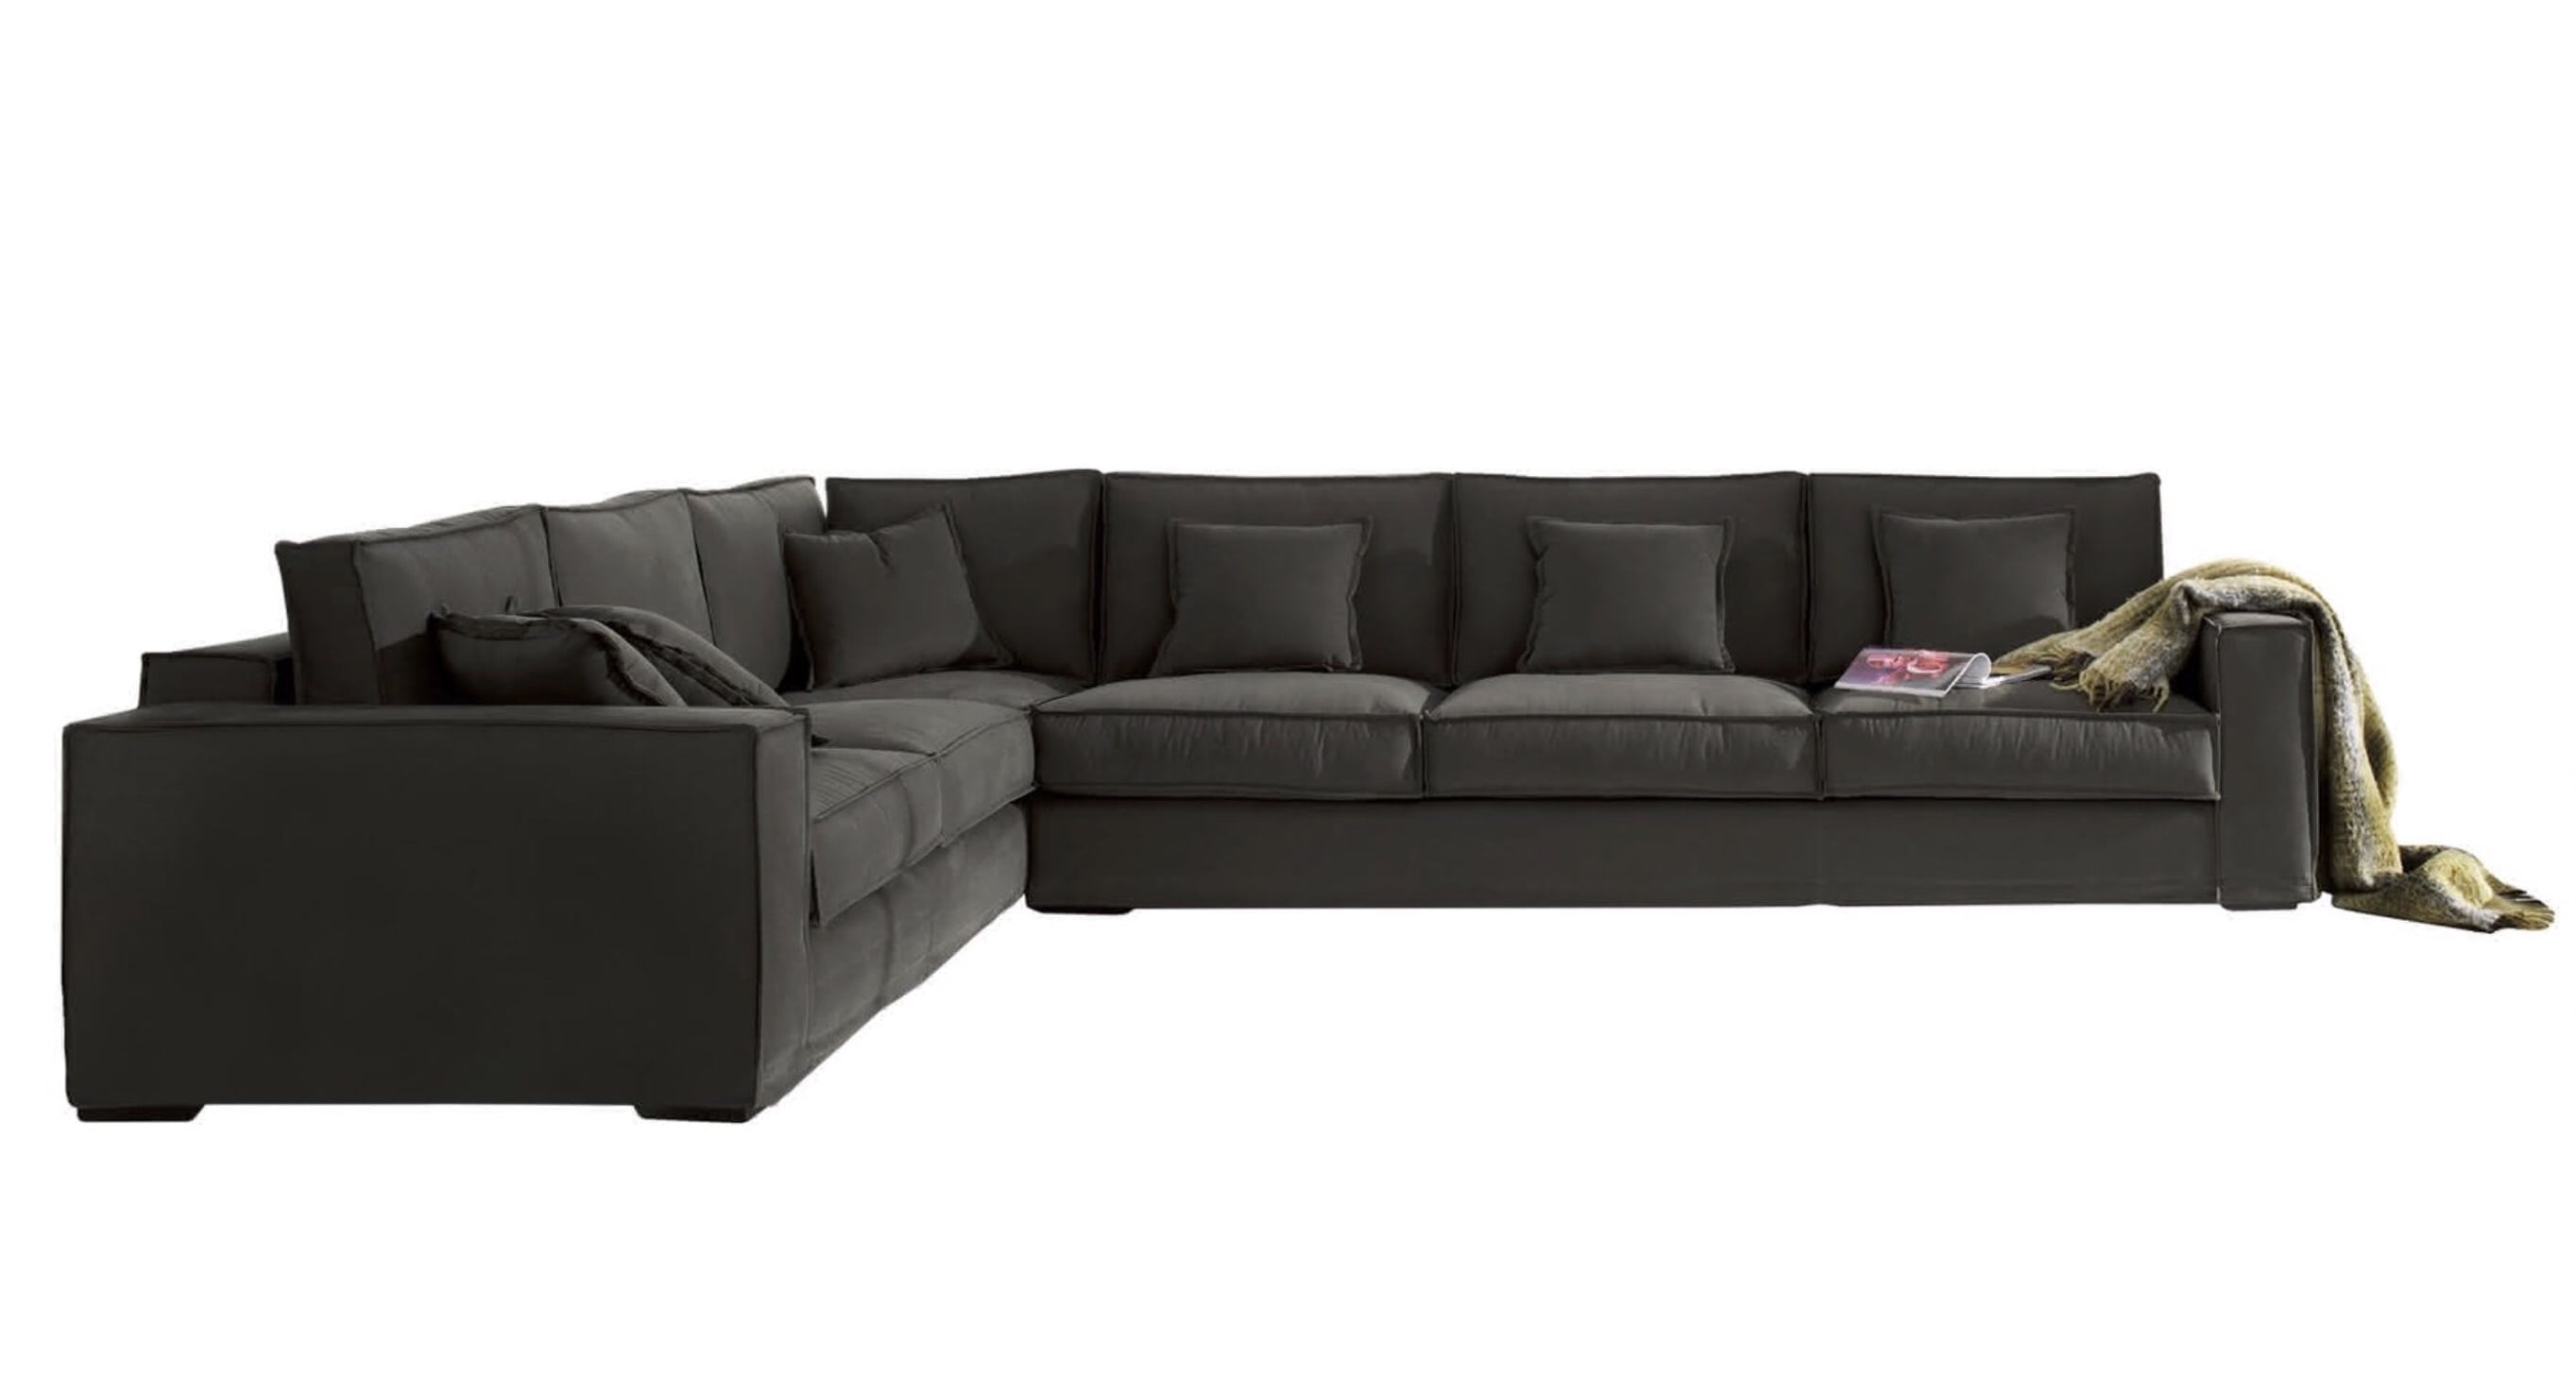 Made to Order Furniture. - Sofa 008-01